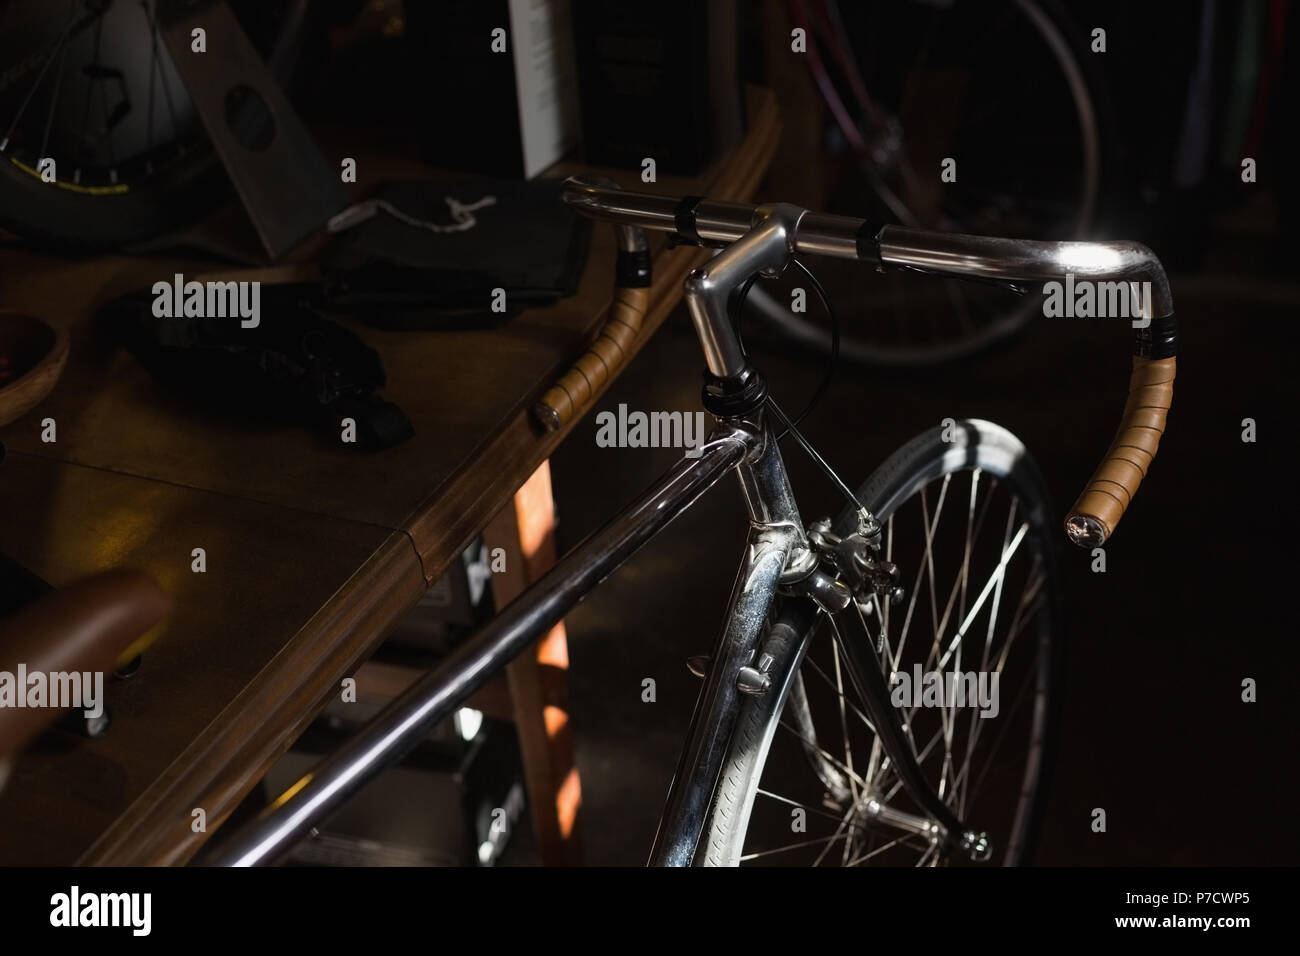 Racing bicycle in workshop Stock Photo